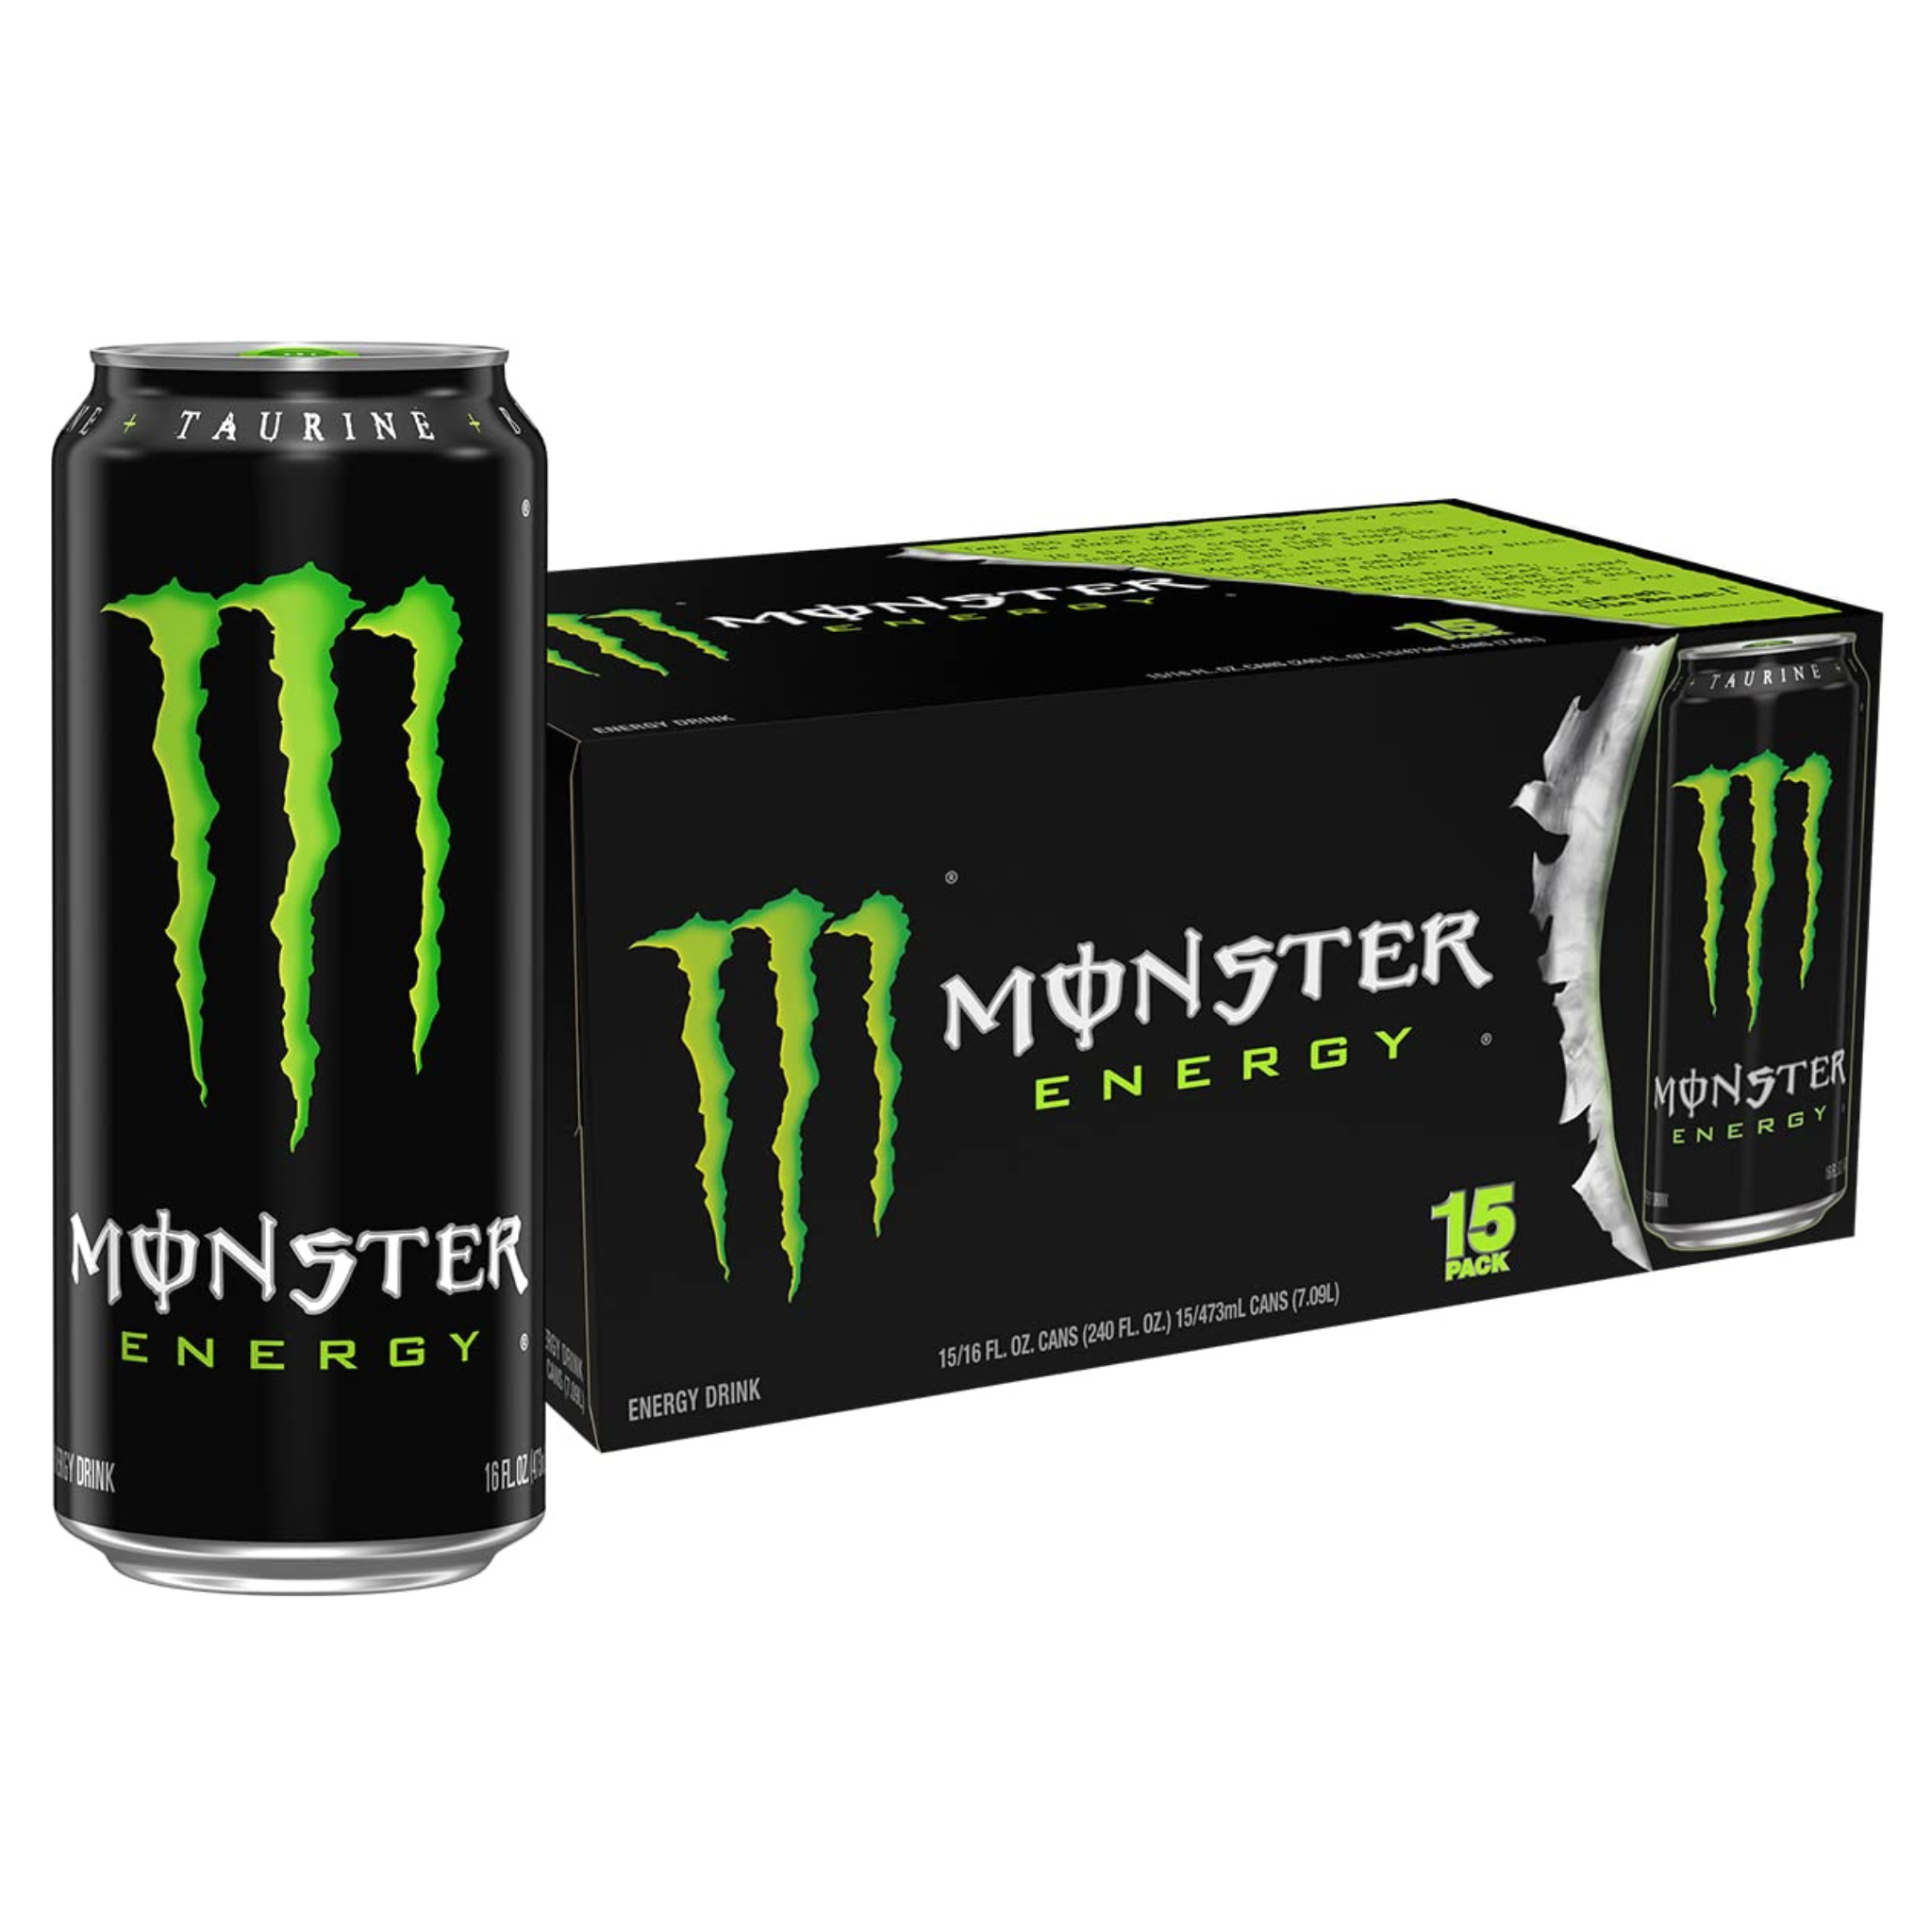 15-Pack 16-Oz Monster Energy Drink (Original Green)